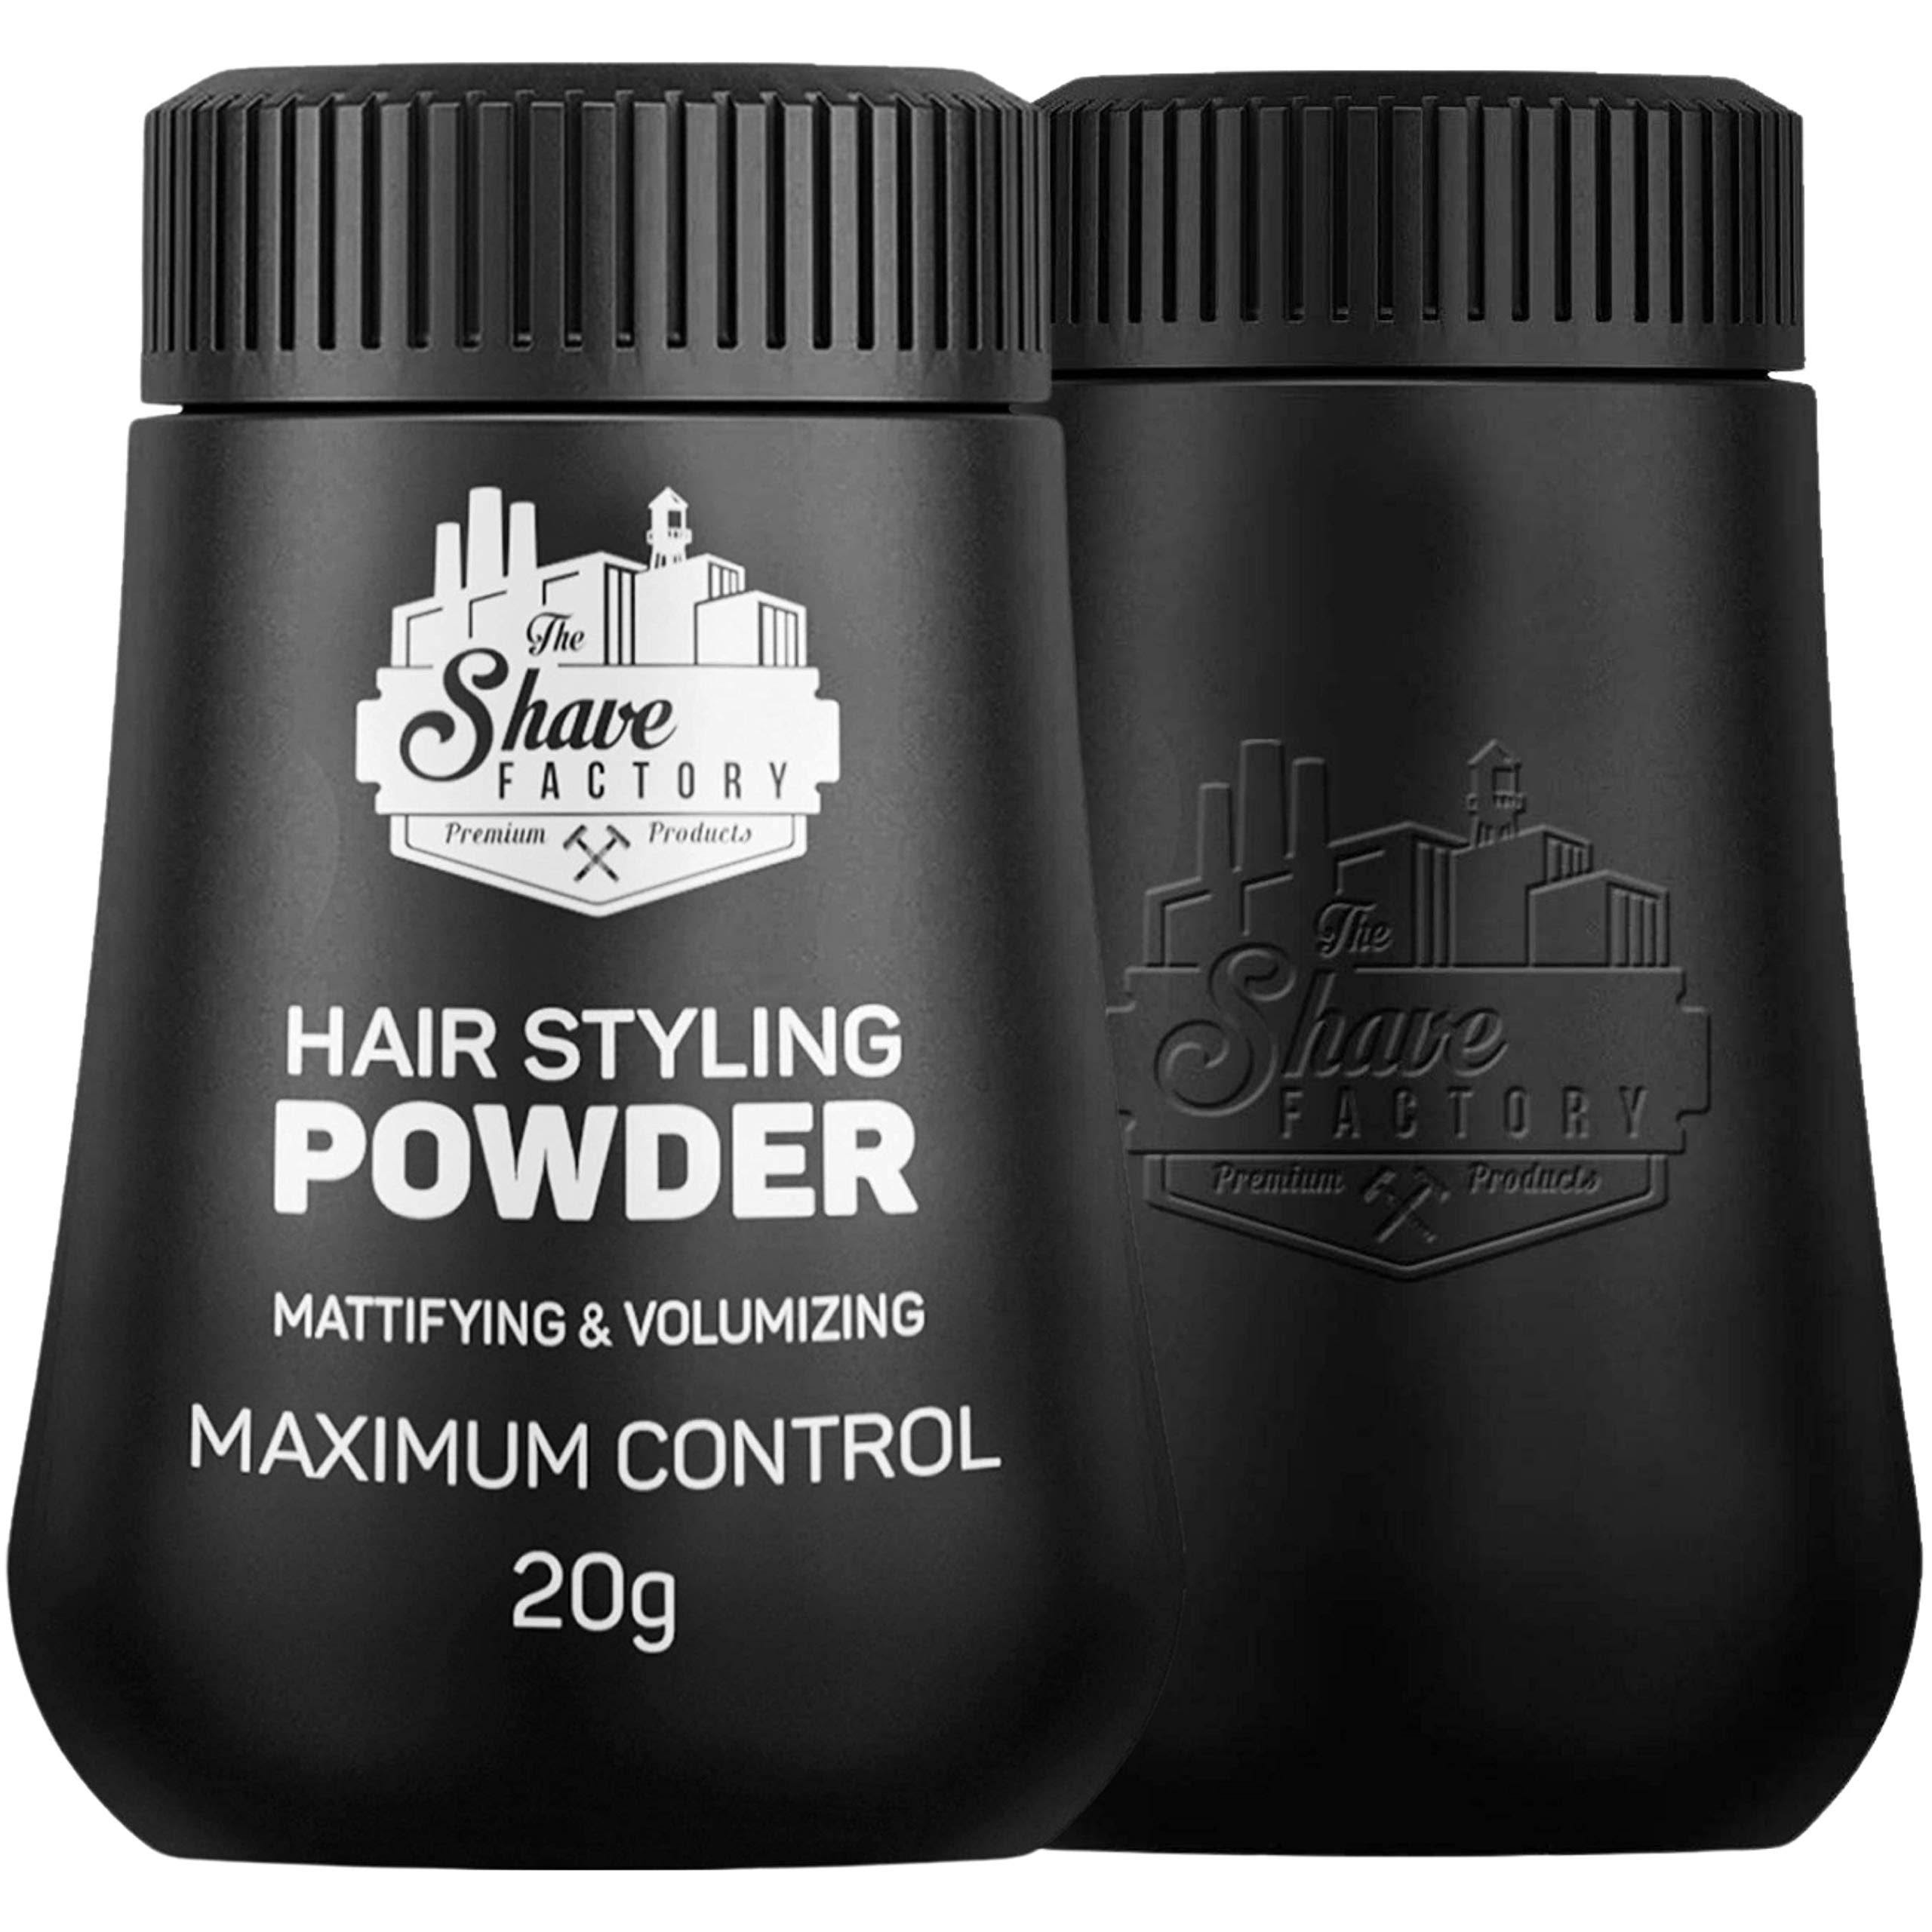 Superb hair volume powder for stunning styling & versatility | Image